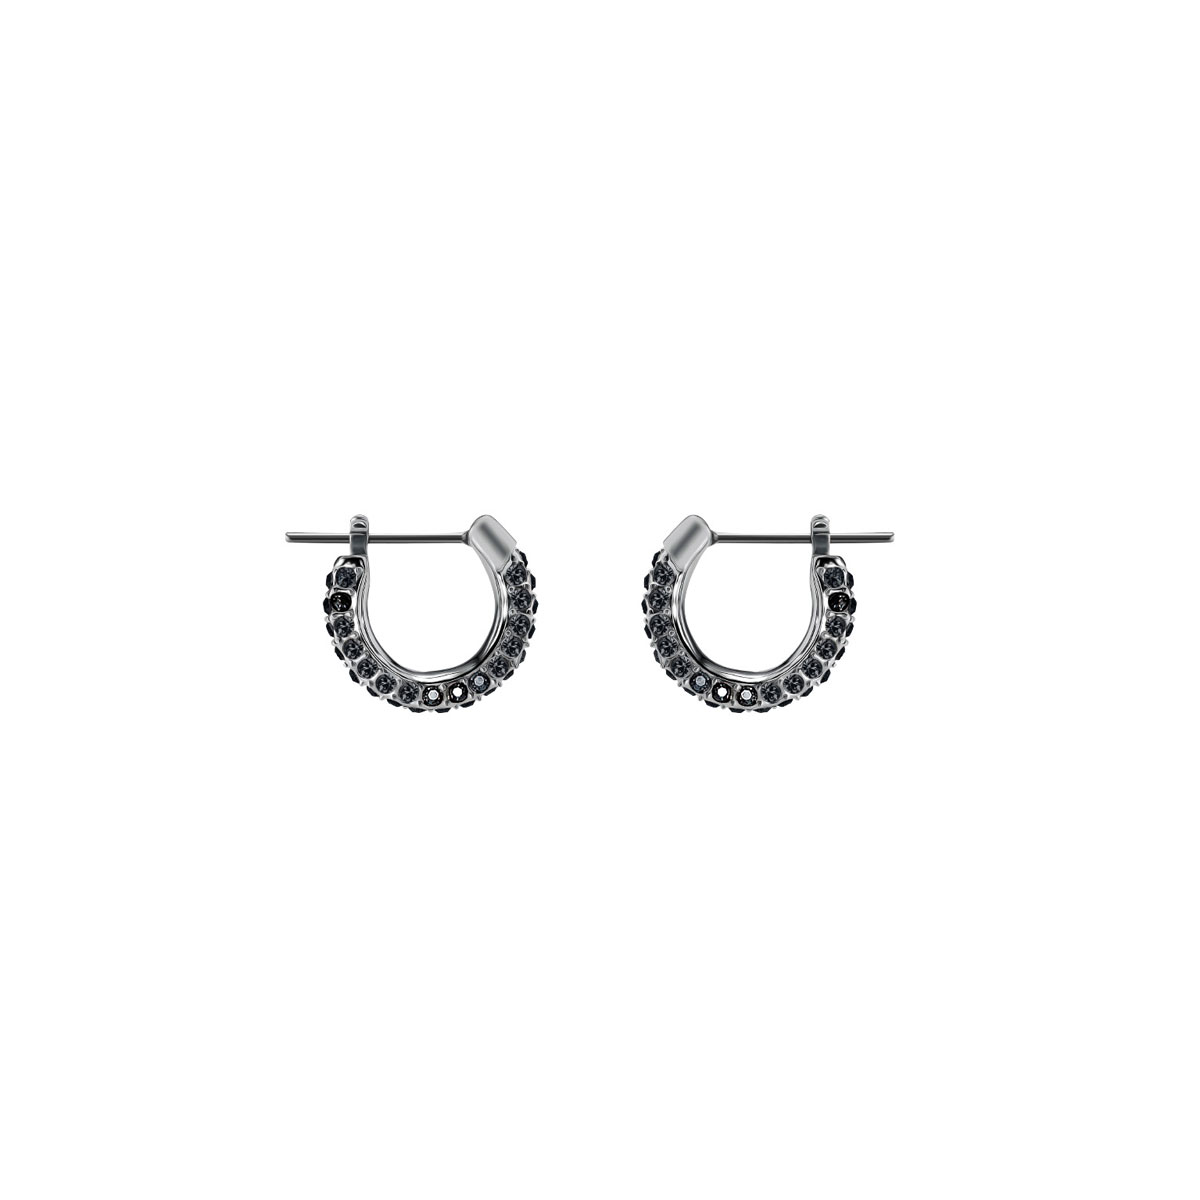 Swarovski Stone Pierced Earrings, Black, Rhodium